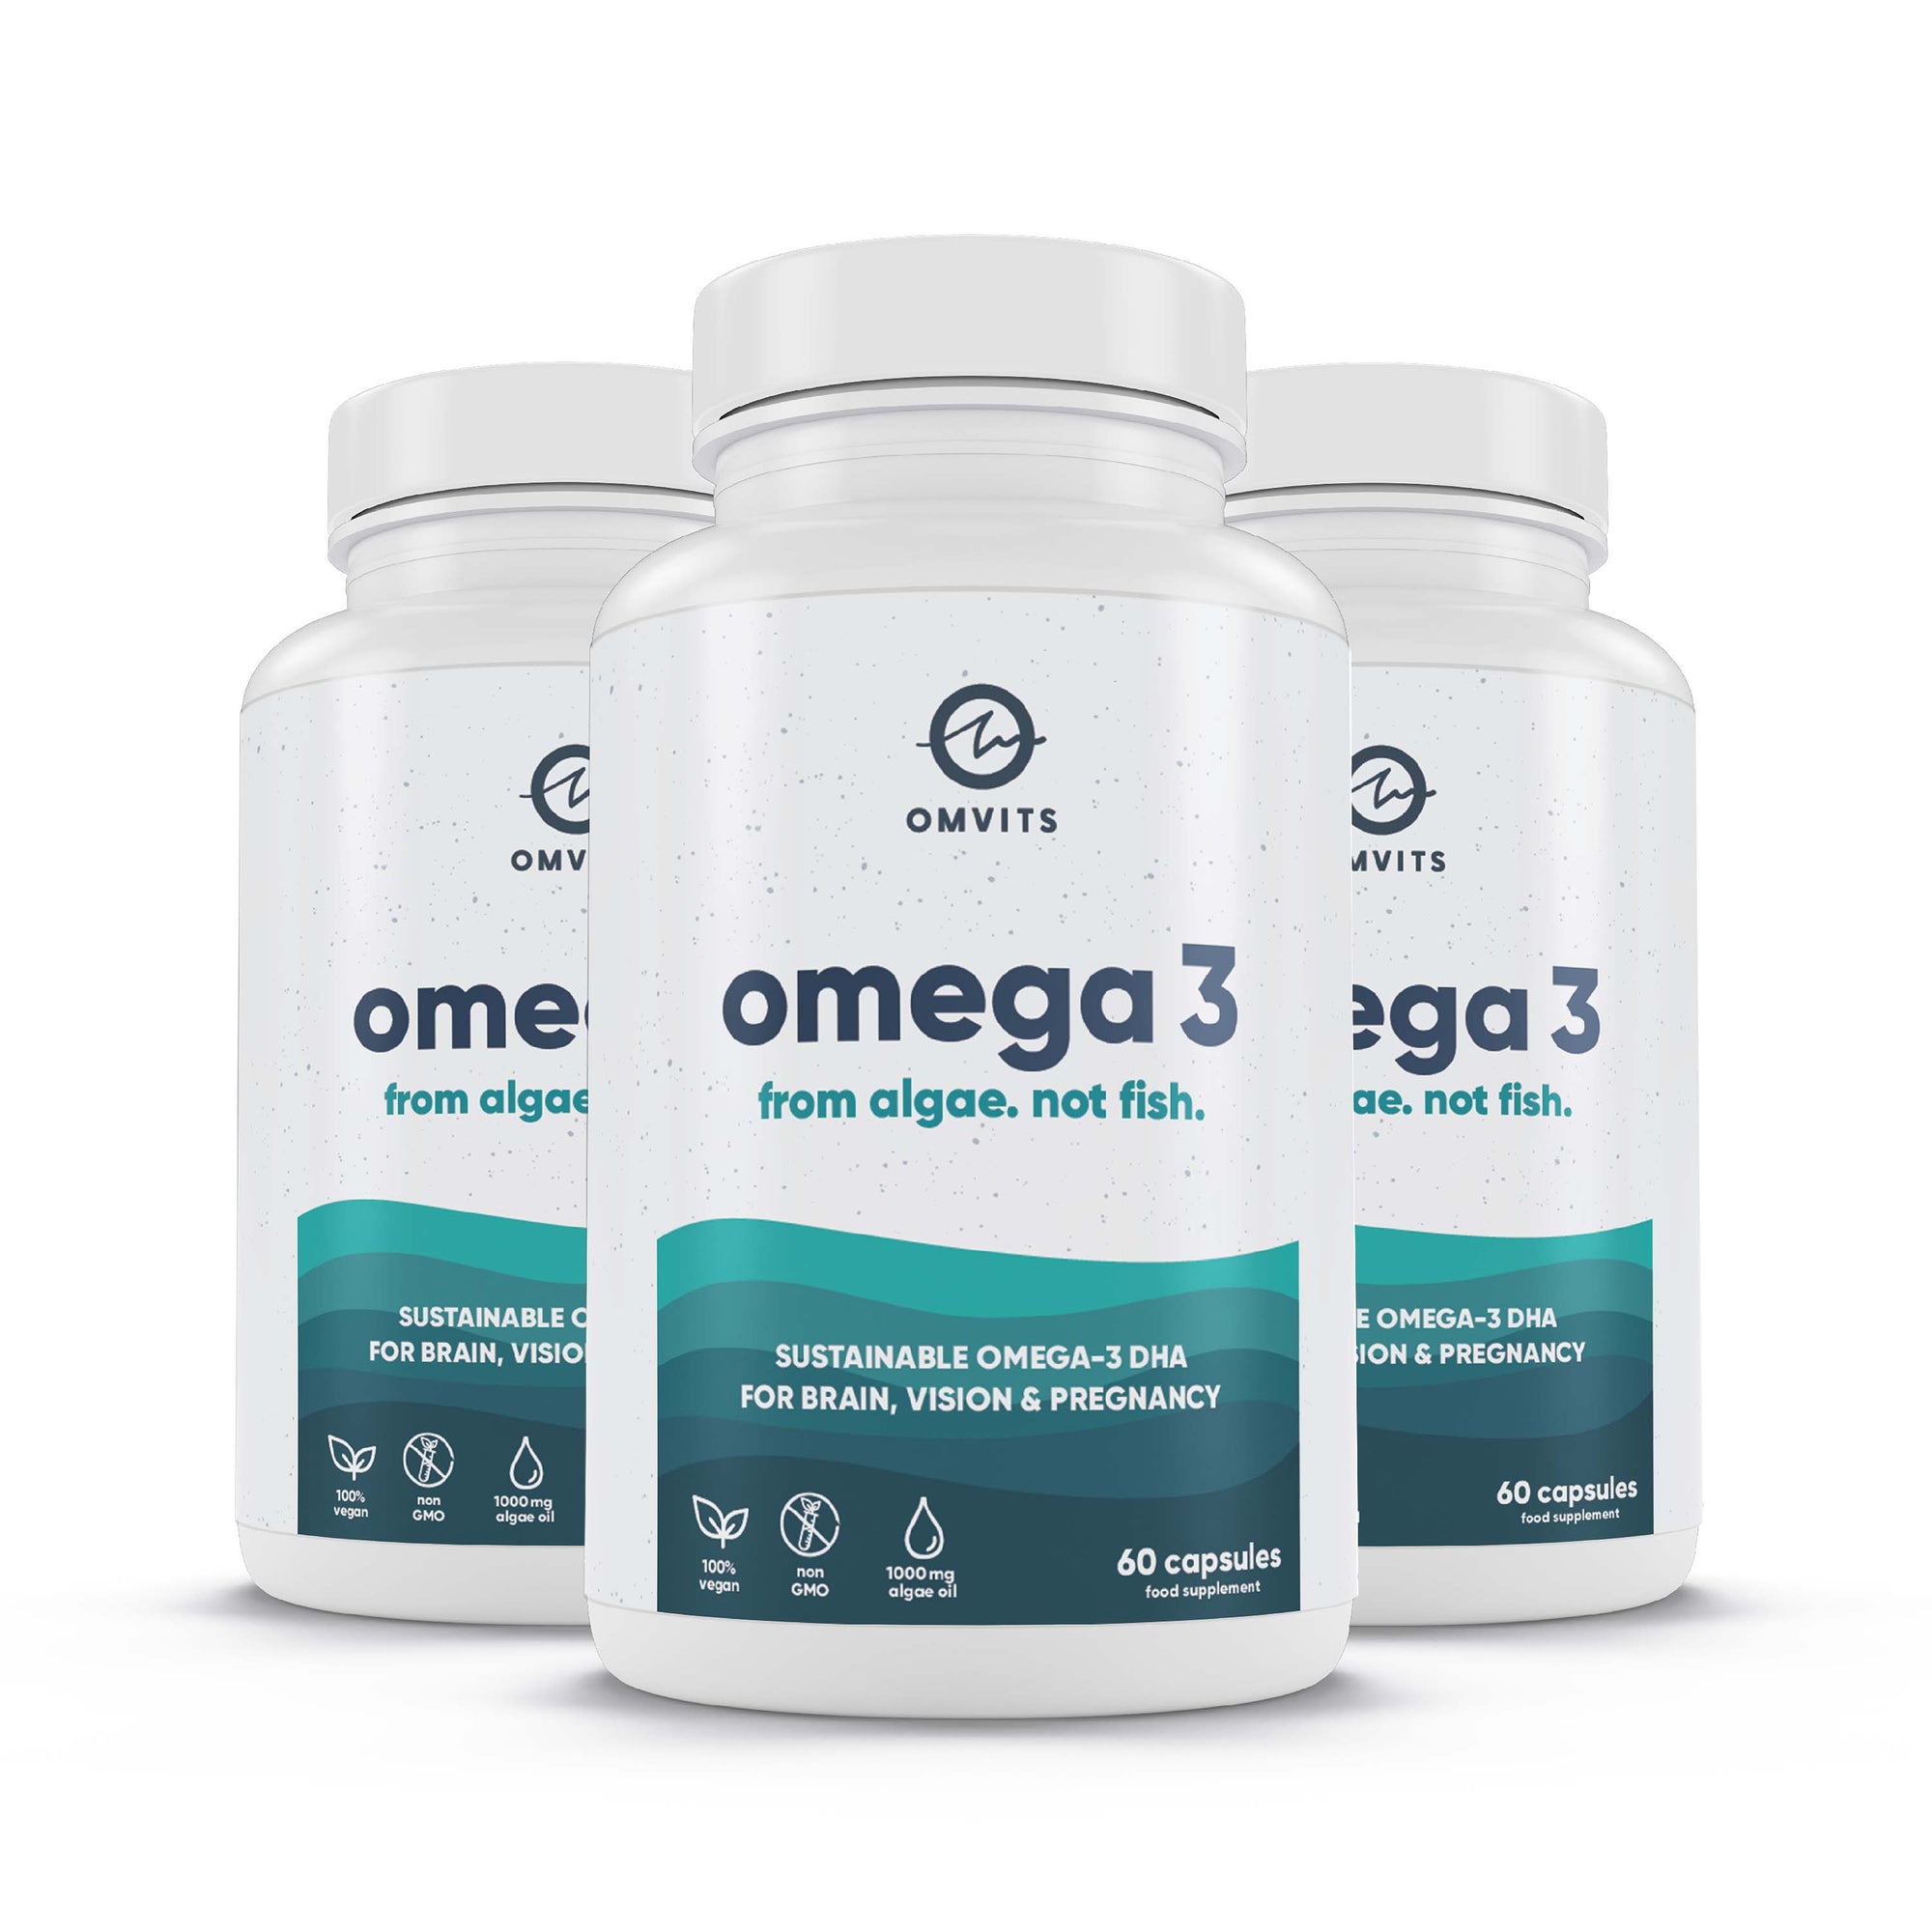 180 Capsules / Recyclable Pot TEST Vegan Omega 3 DHA - 180 Algae Oil Capsules - Plastic-free Pouch  -  Omvits